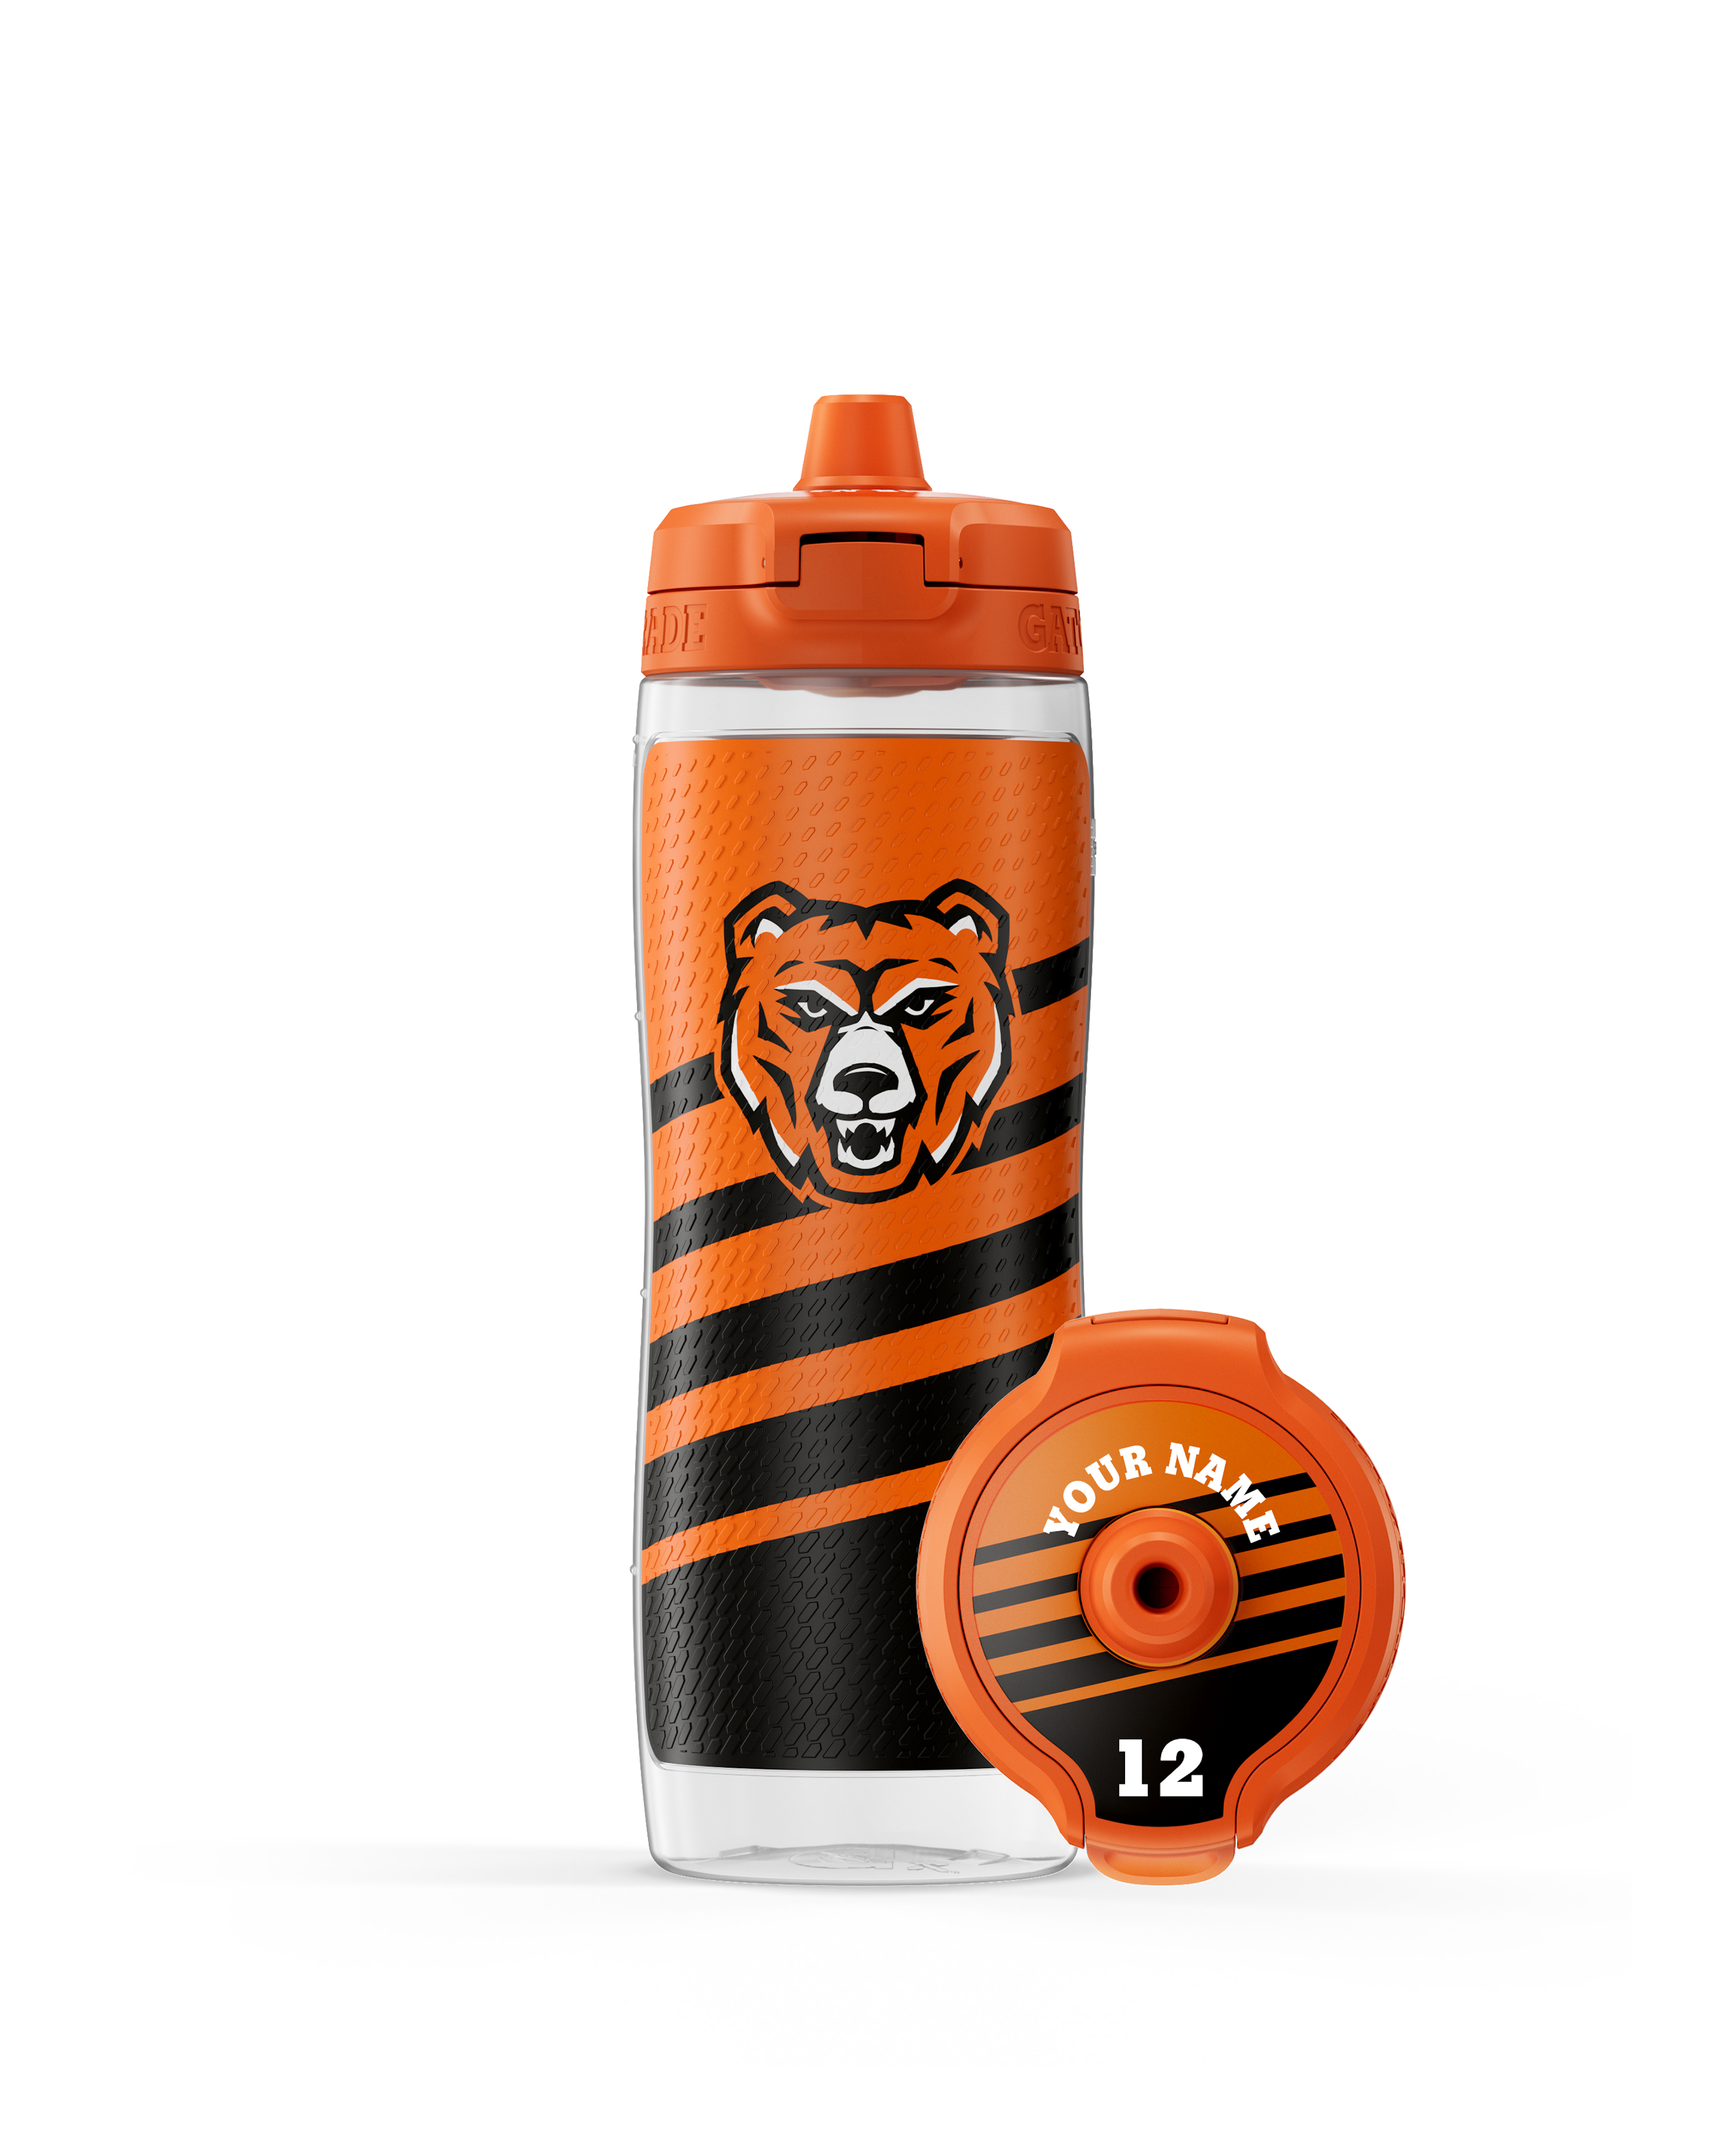 Customizable bottle with mascot